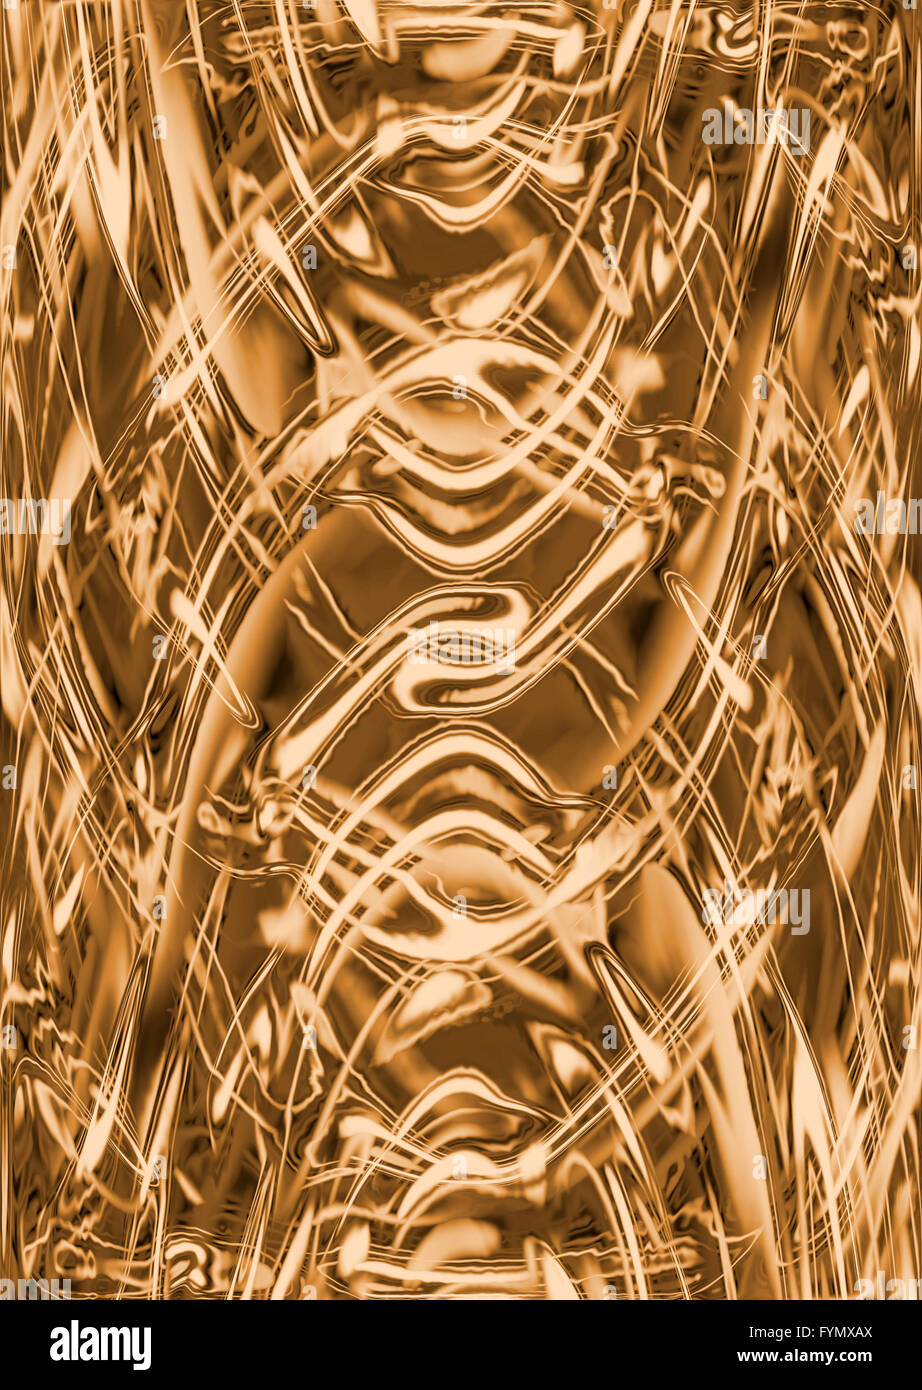 Abstract golden light pattern Stock Photo